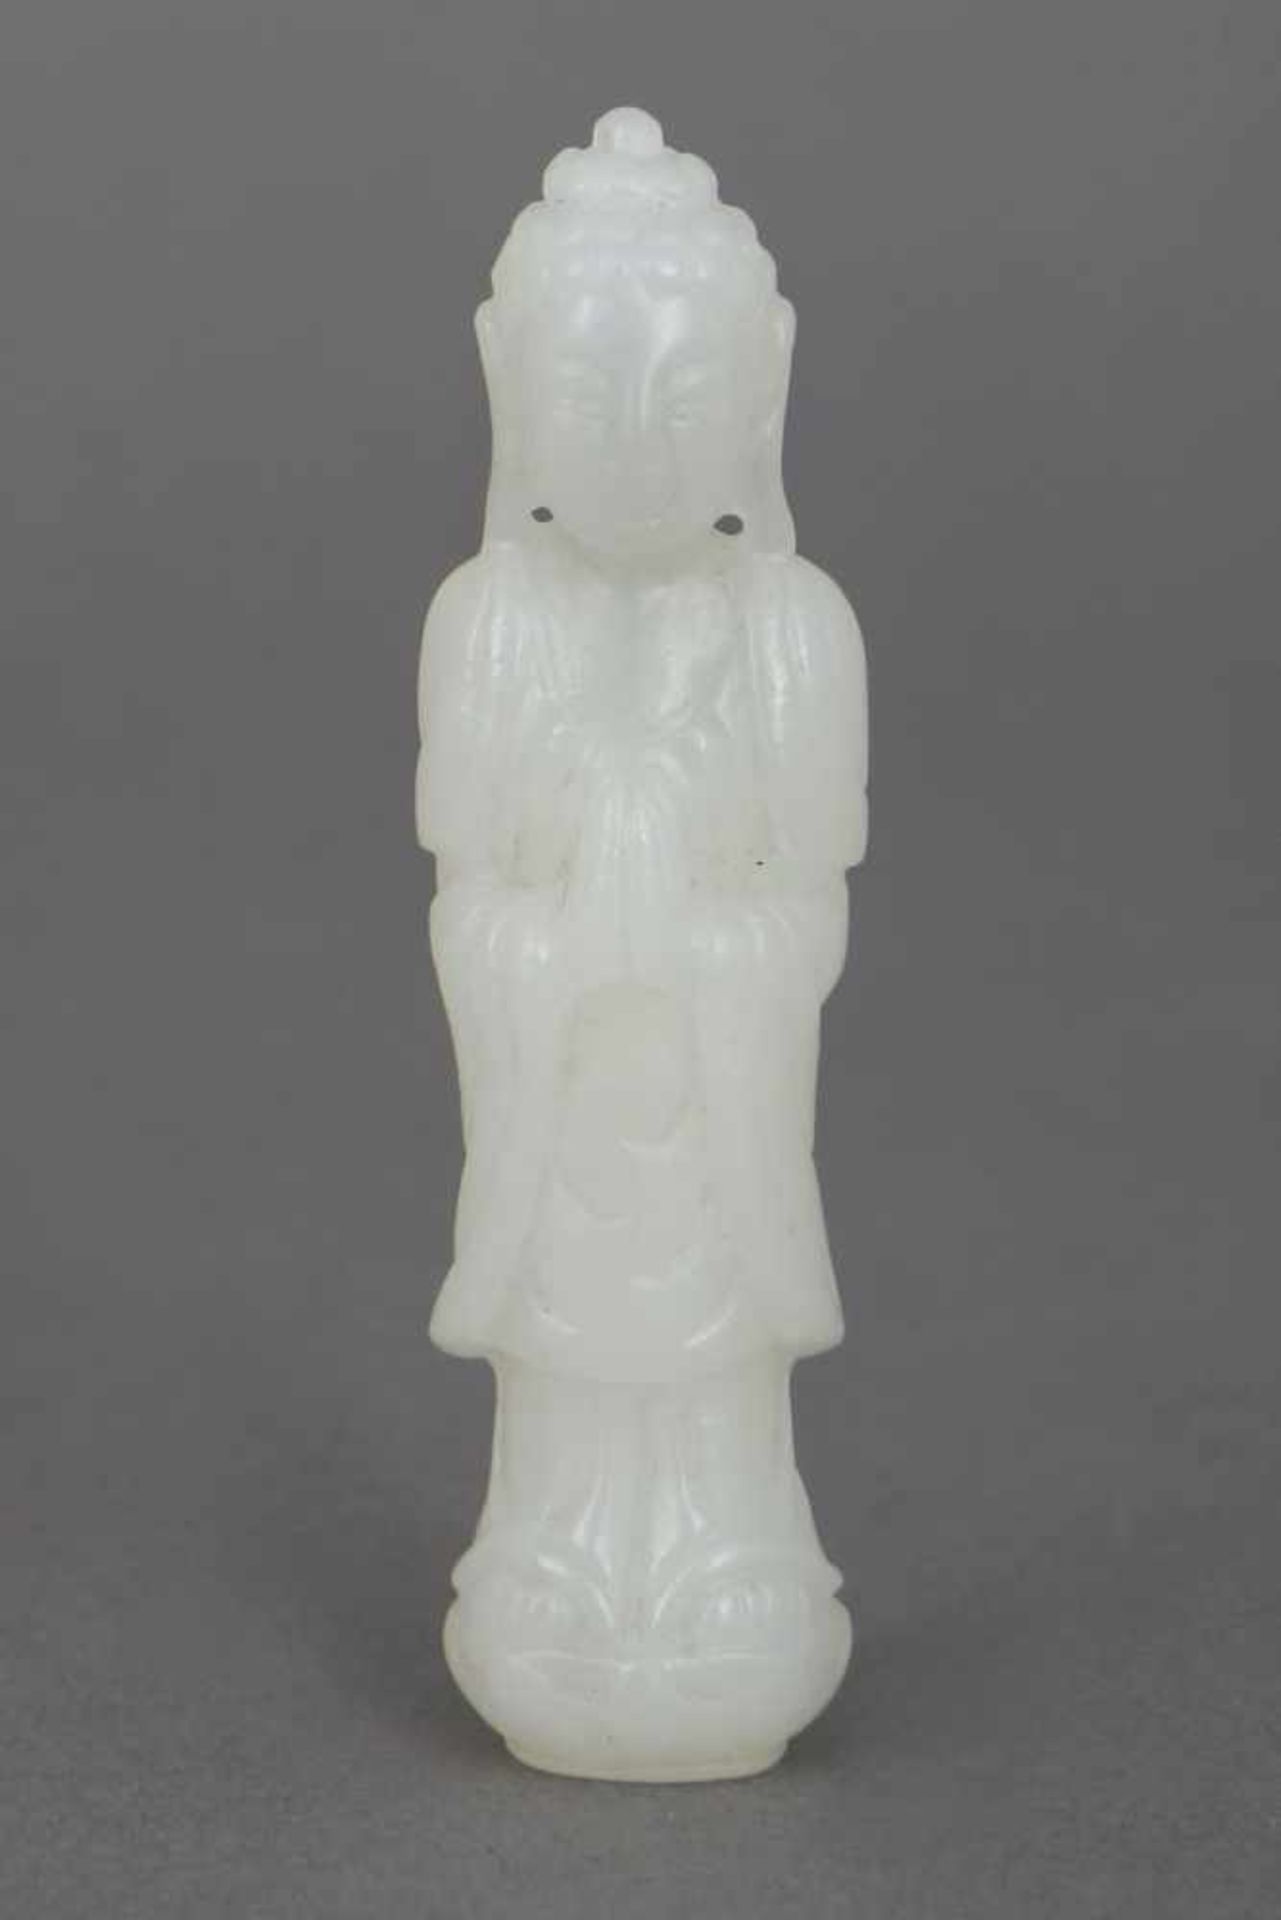 Jade-Anhängerhelle, transluzente Jade, ¨Stehender Buddha in Meditationsgestus¨, H ca. 6cm